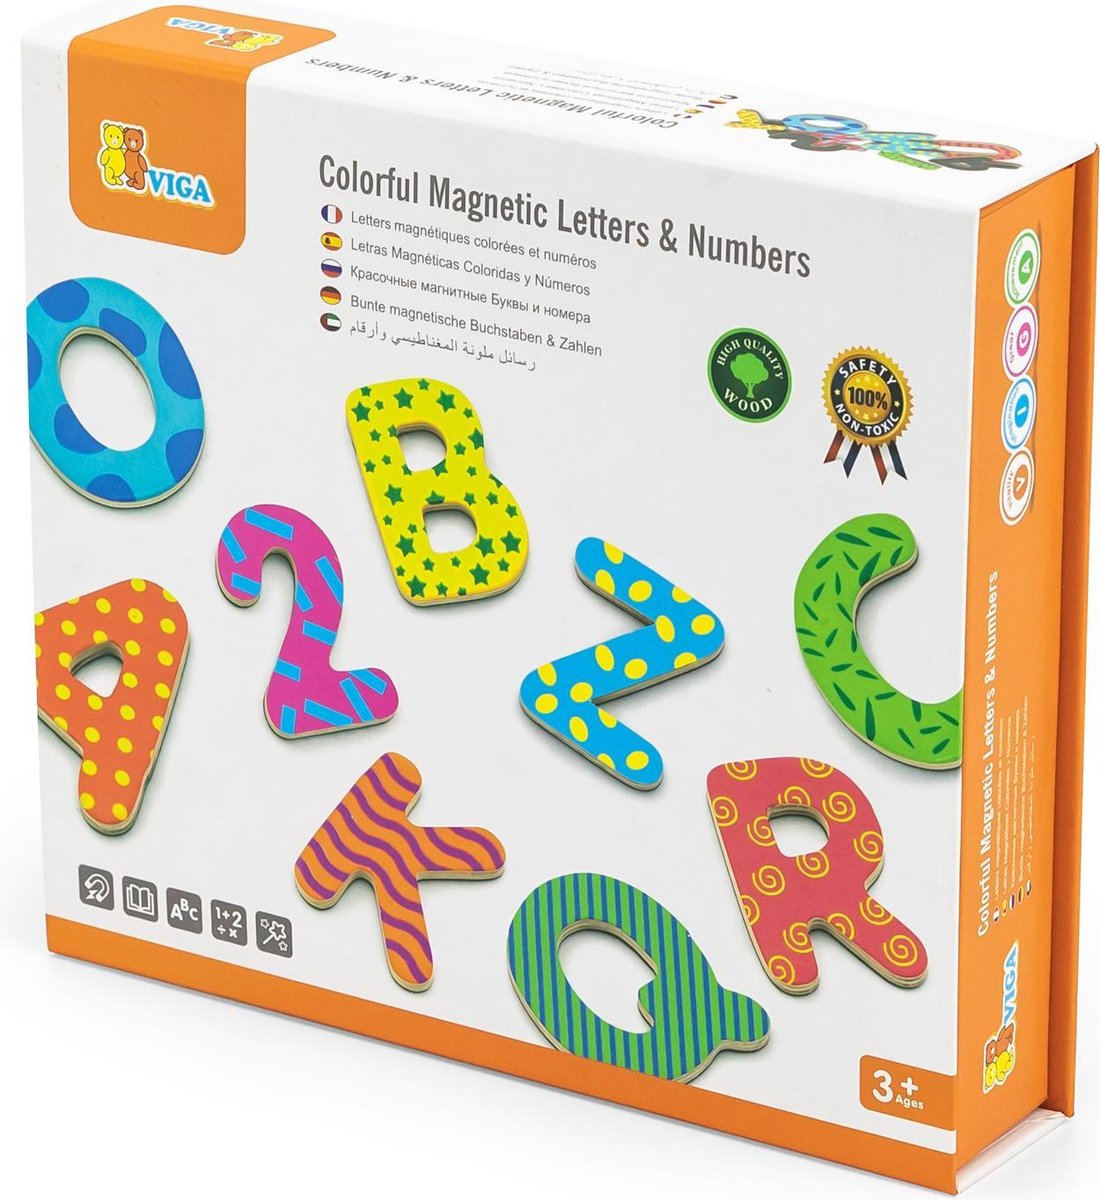 Viga Toys - Magnetische Letters & Nummers 77 stuks | Games | bol.com